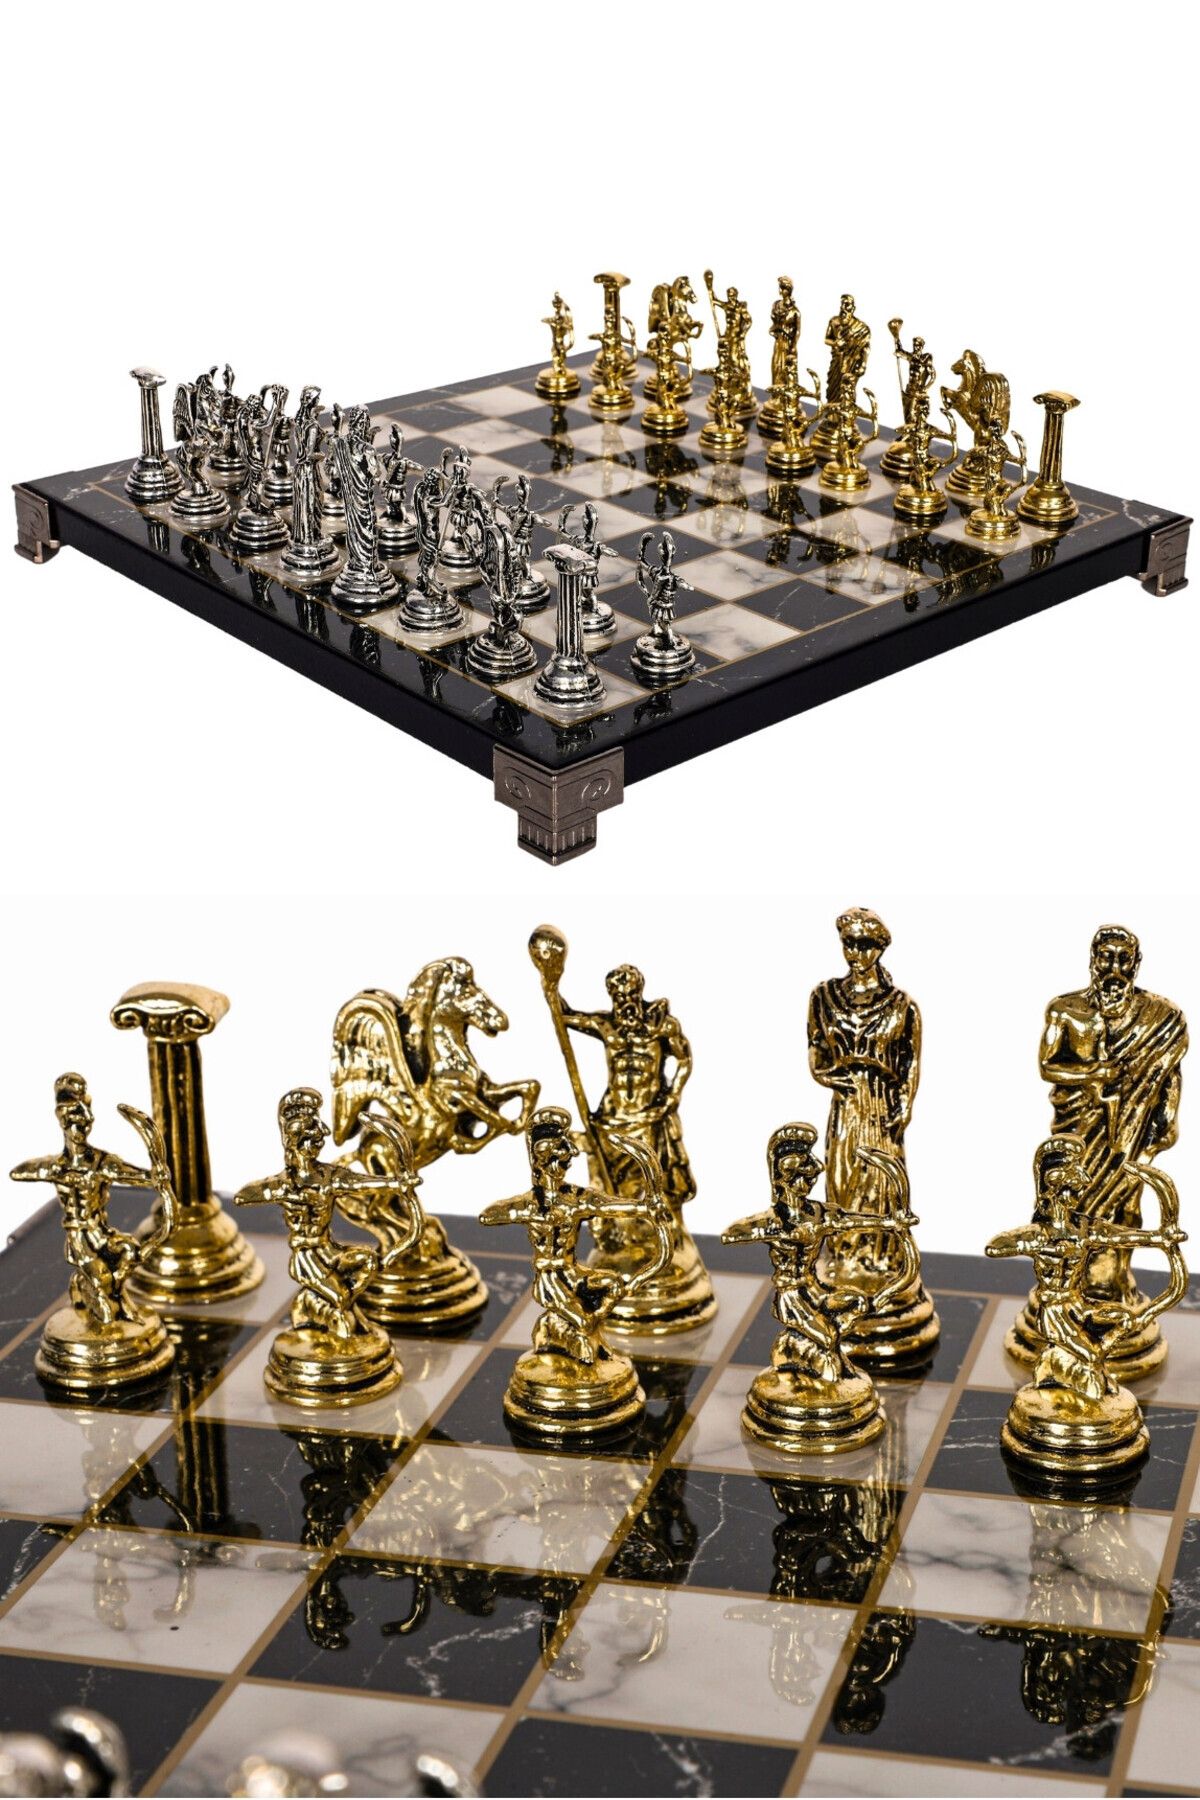 Cooper Chess Metal Satranç Takımı | 25cm Mermer Desenli Satranç Tahtası | Mitolojik Tanrı Figürlü Roma Okçu